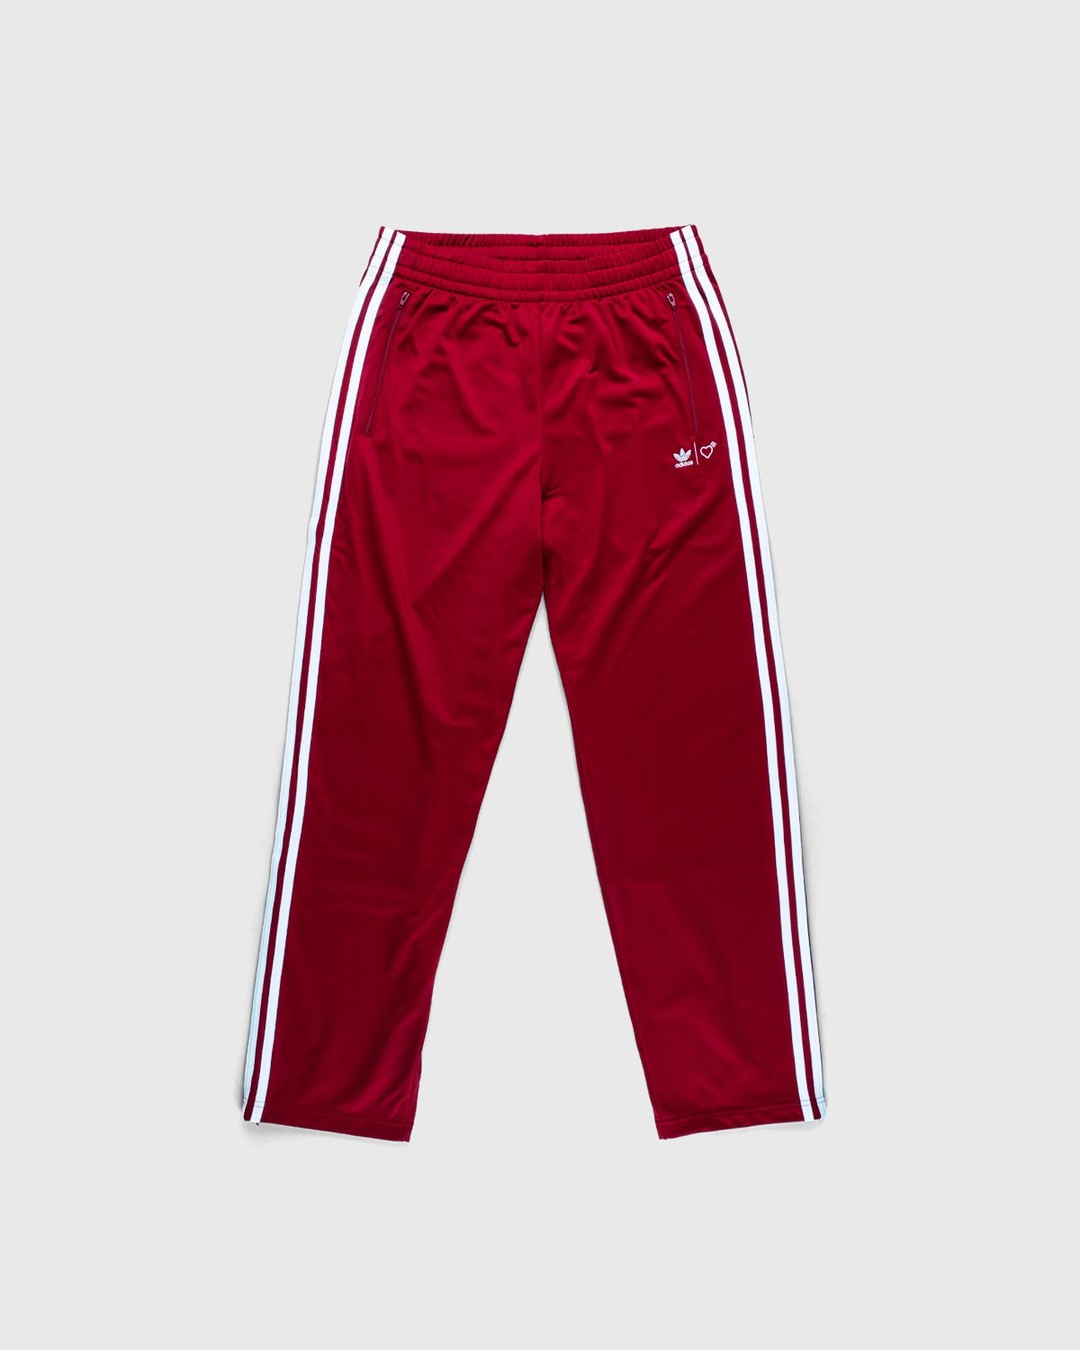 adidas Originals x Human Made – Firebird Track Pants Burgundy - Track Pants - Red - Image 1